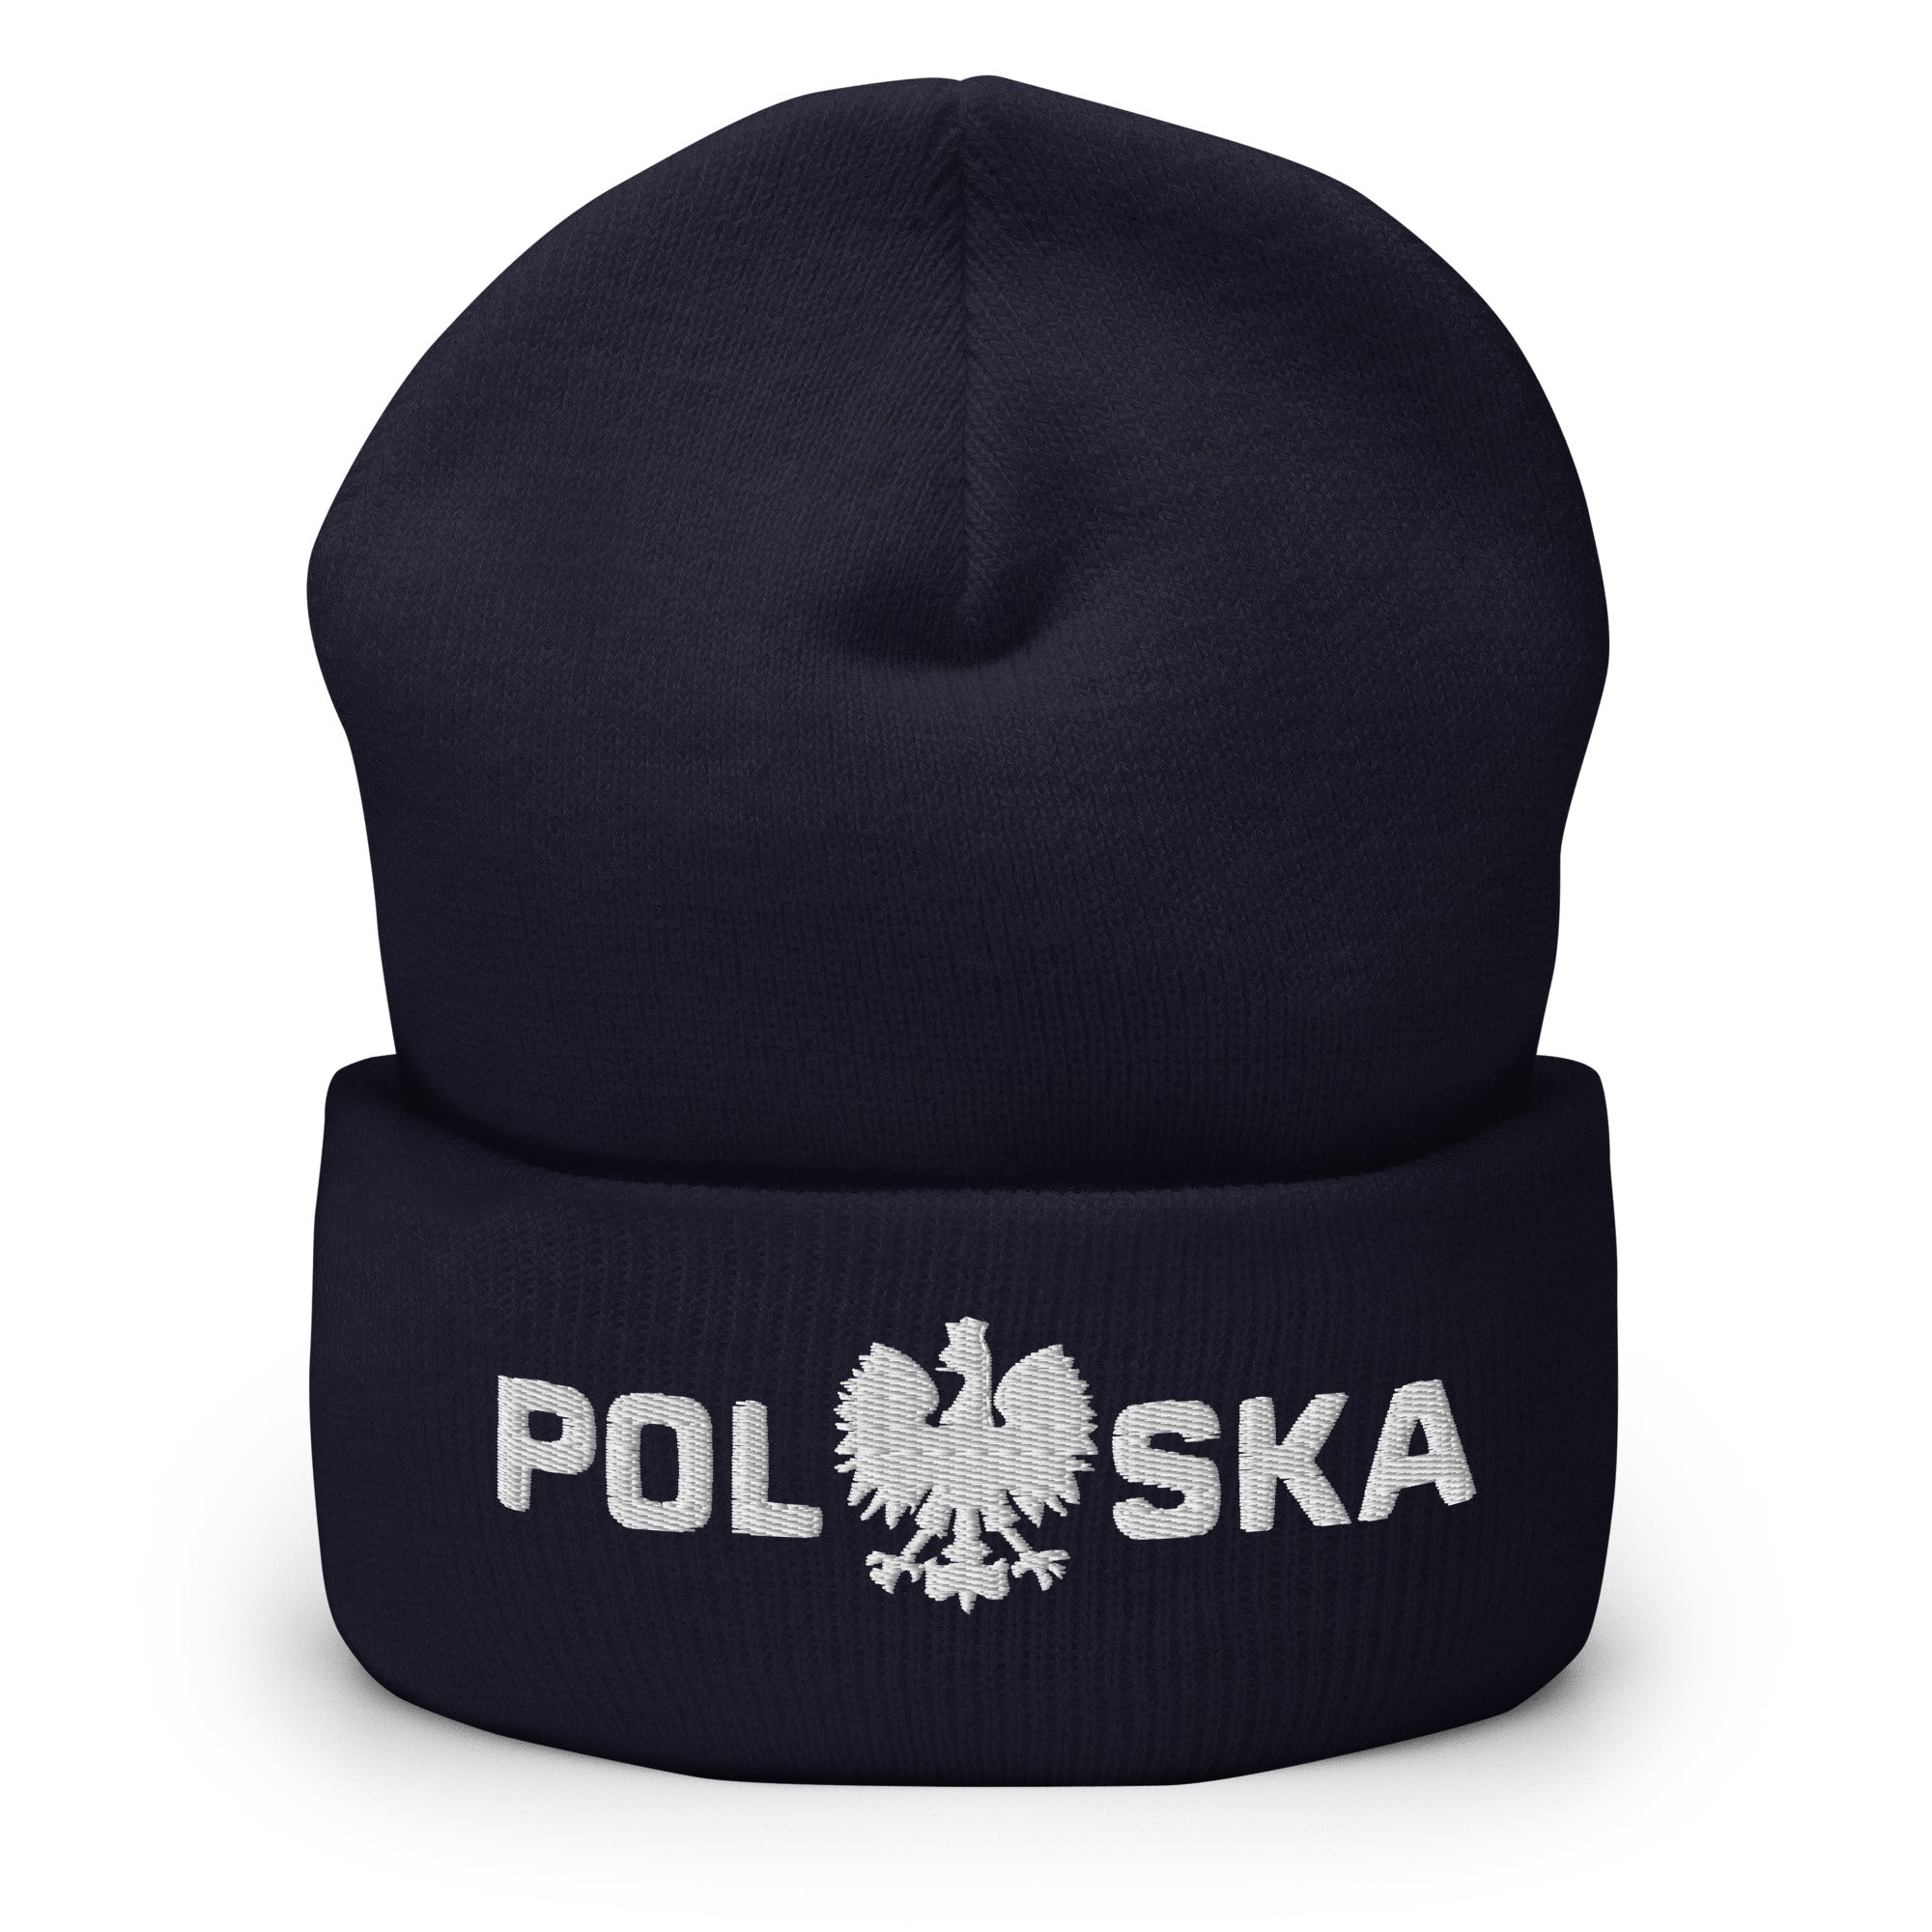 Polska Thick Lettering Cuffed Beanie  Polish Shirt Store Navy  